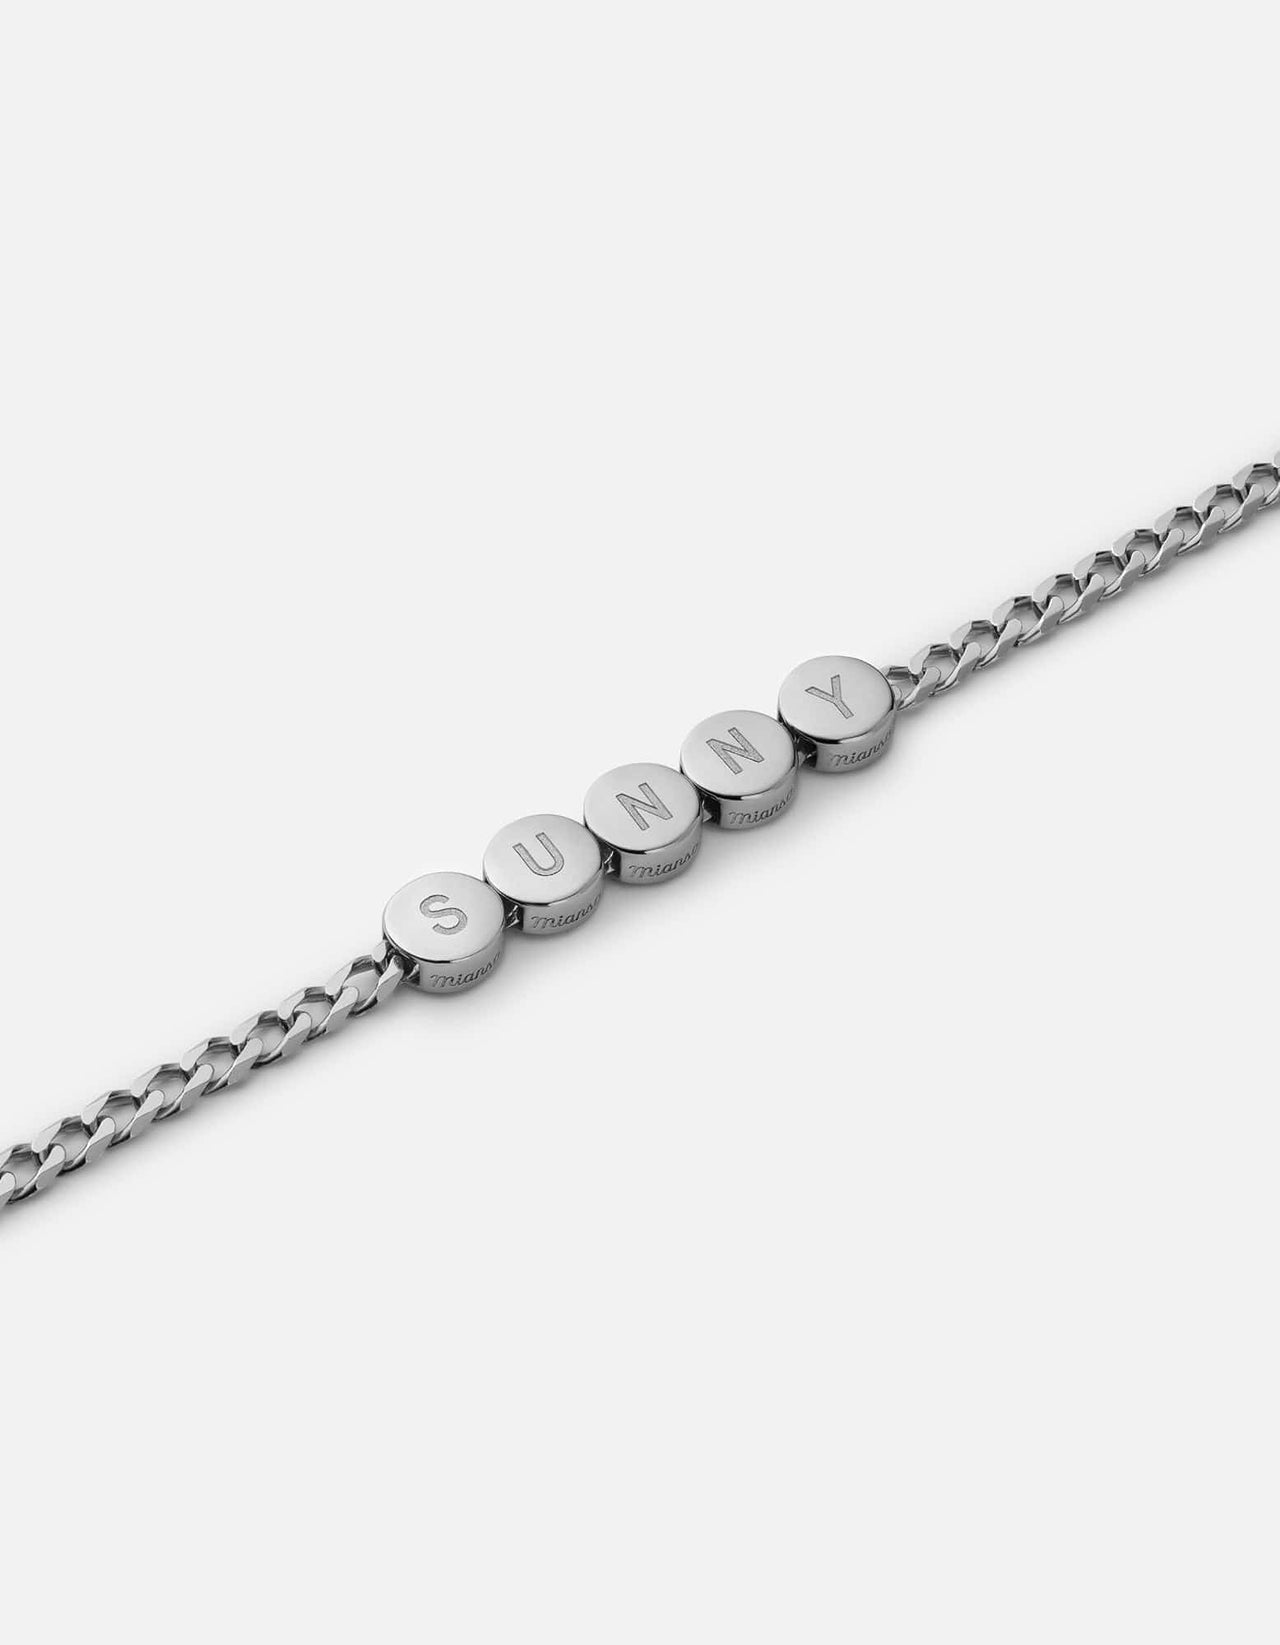 Miansai Men's 4mm Cuban Chain Necklace, Sterling Silver, Size 22 in.